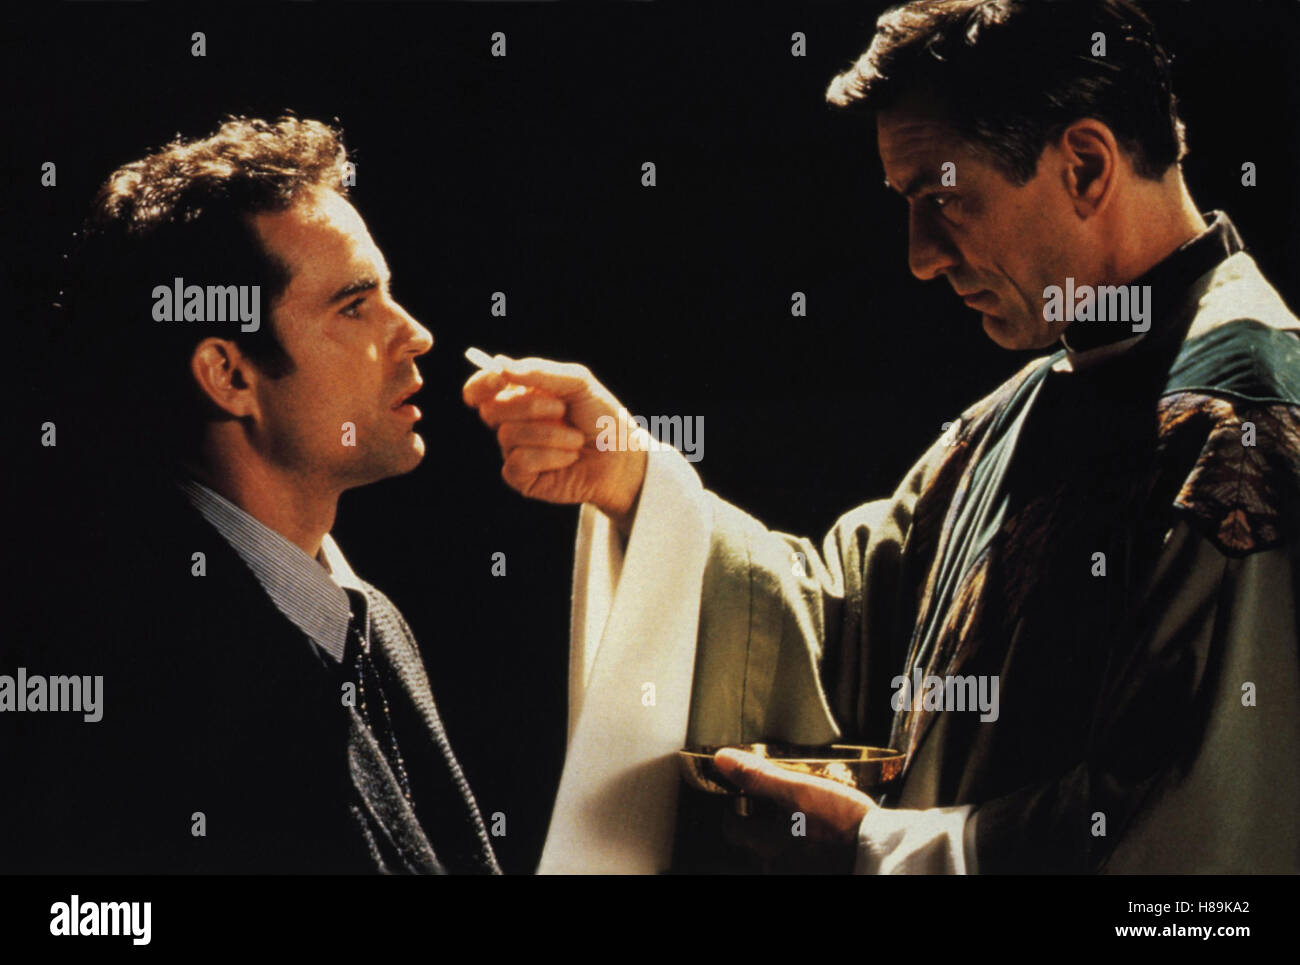 Di traversine (traversine) USA 1997, Regie: Barry Levinson, Jason Patric, Robert de Niro; Stichwort: Priester, Pater, Abendmahl, Oblato Foto Stock